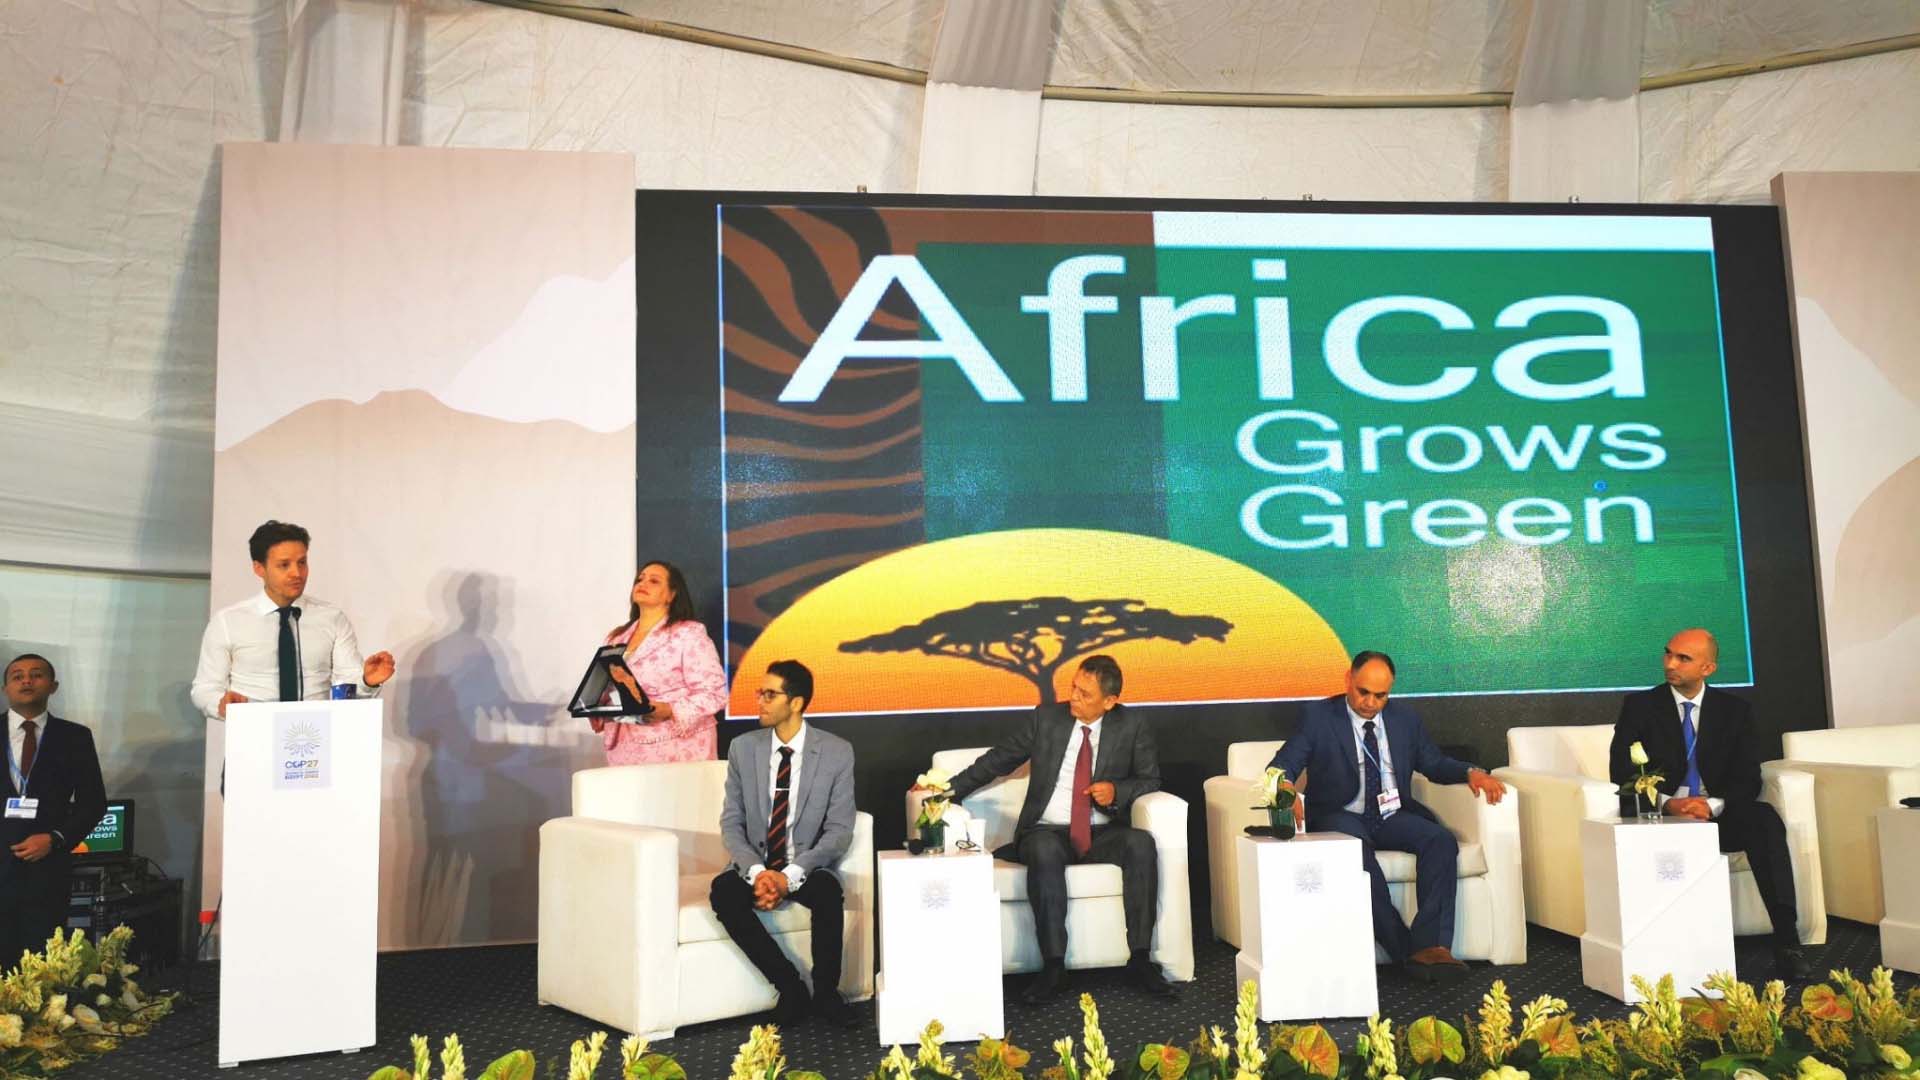 Africa Grows Green Awards